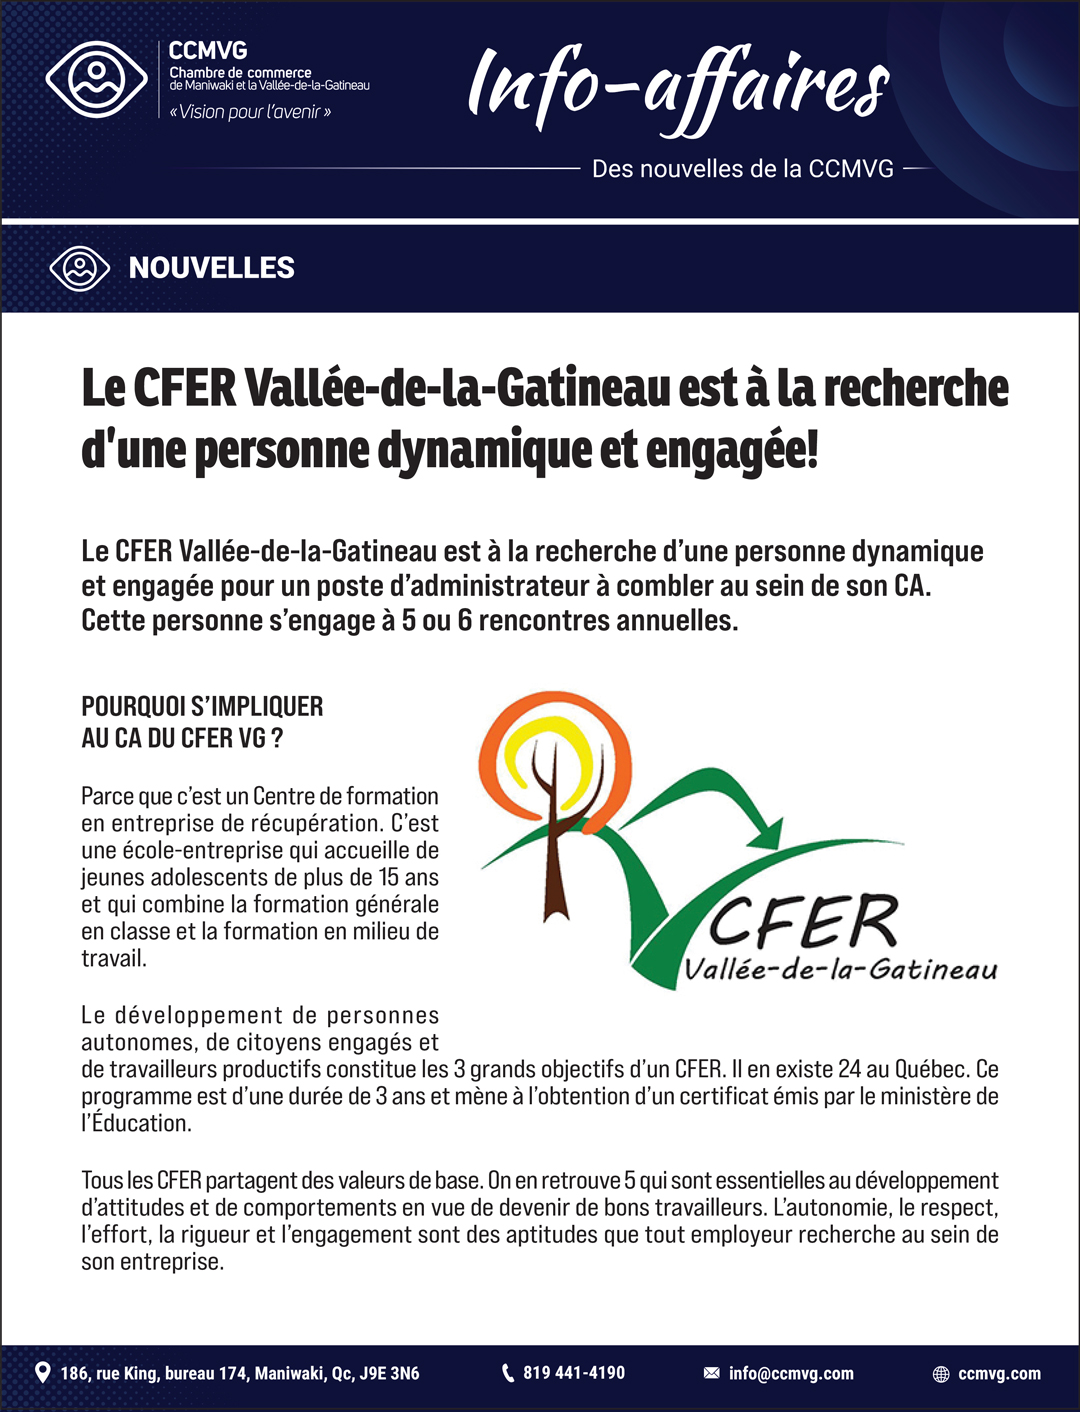 CFER Vallée de la Gatineau